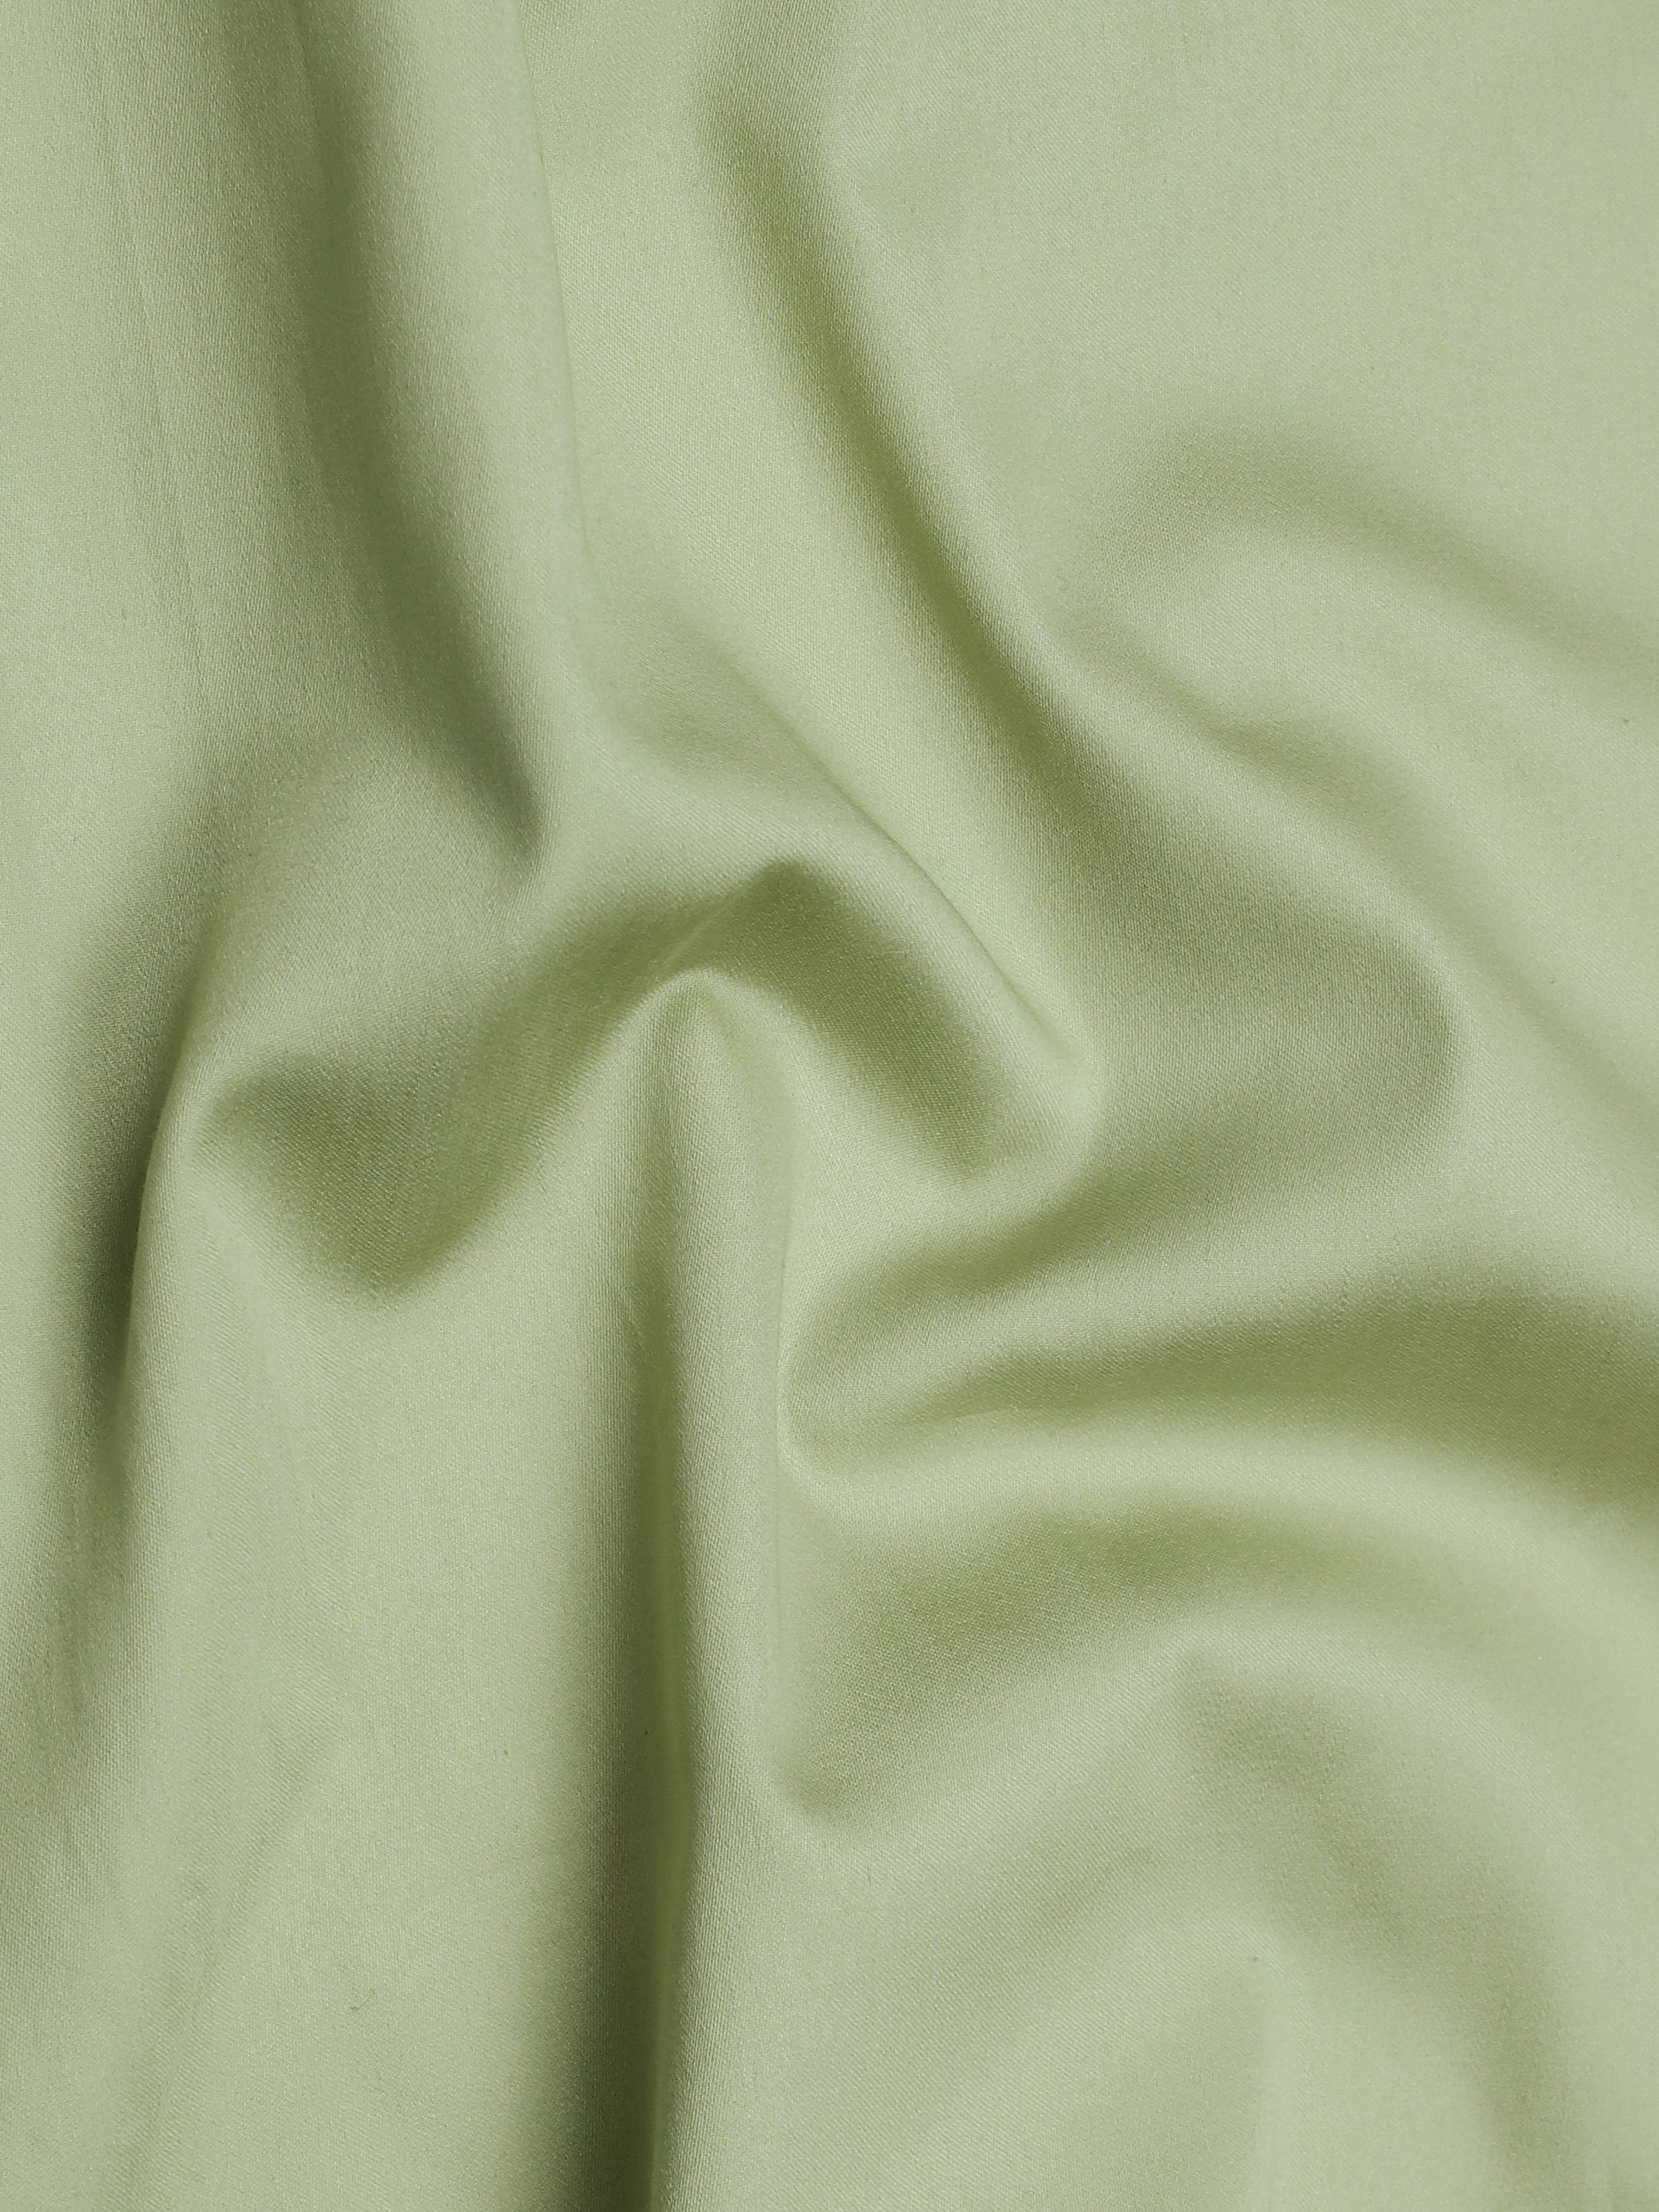 Oasis Green Subtle Sheen Super Soft Premium Satin Cotton Shirt-[ON SALE]